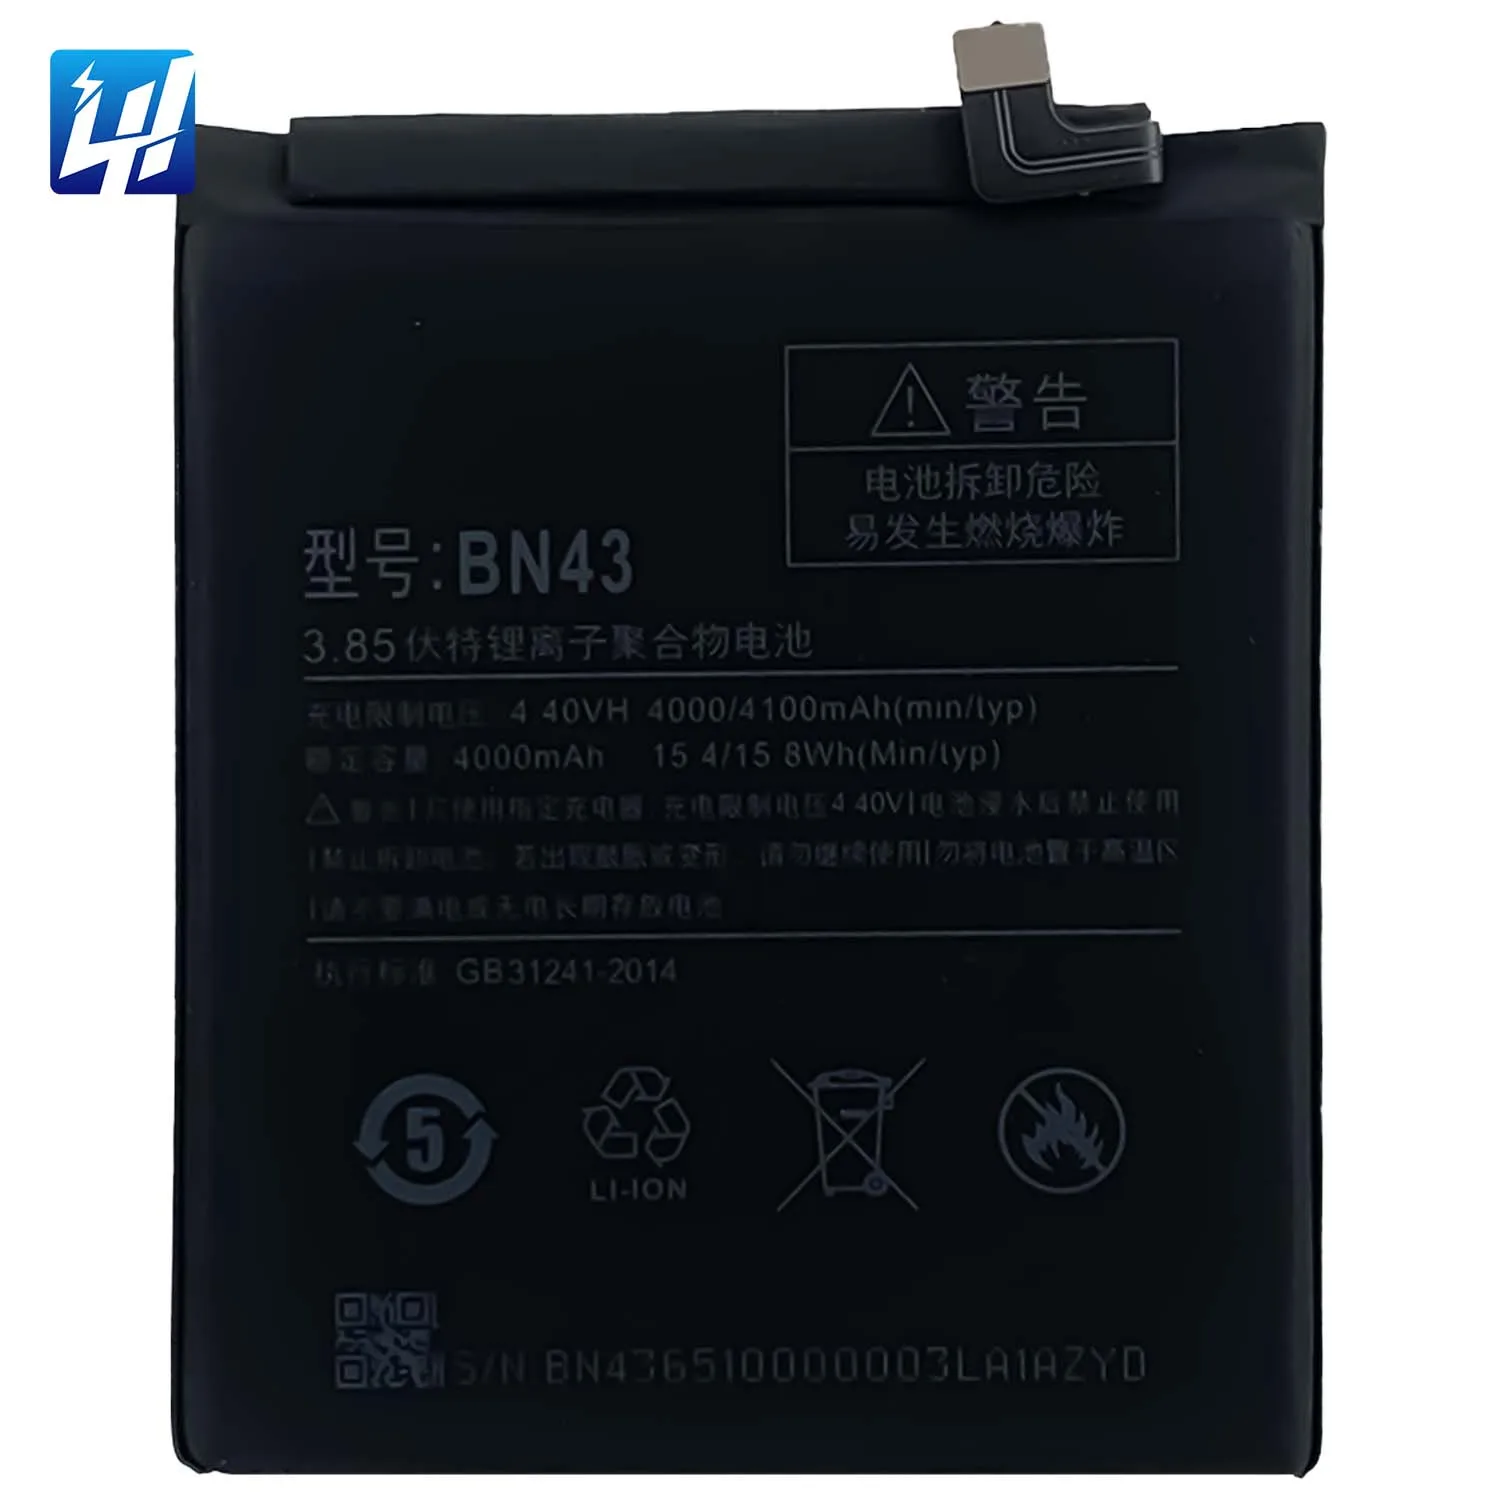 

100% Original Phone Battery BN43 for Xiaomi Redmi Note 4X Redmi Note 4 Pro 4100mAh High Quality Replacement Battery